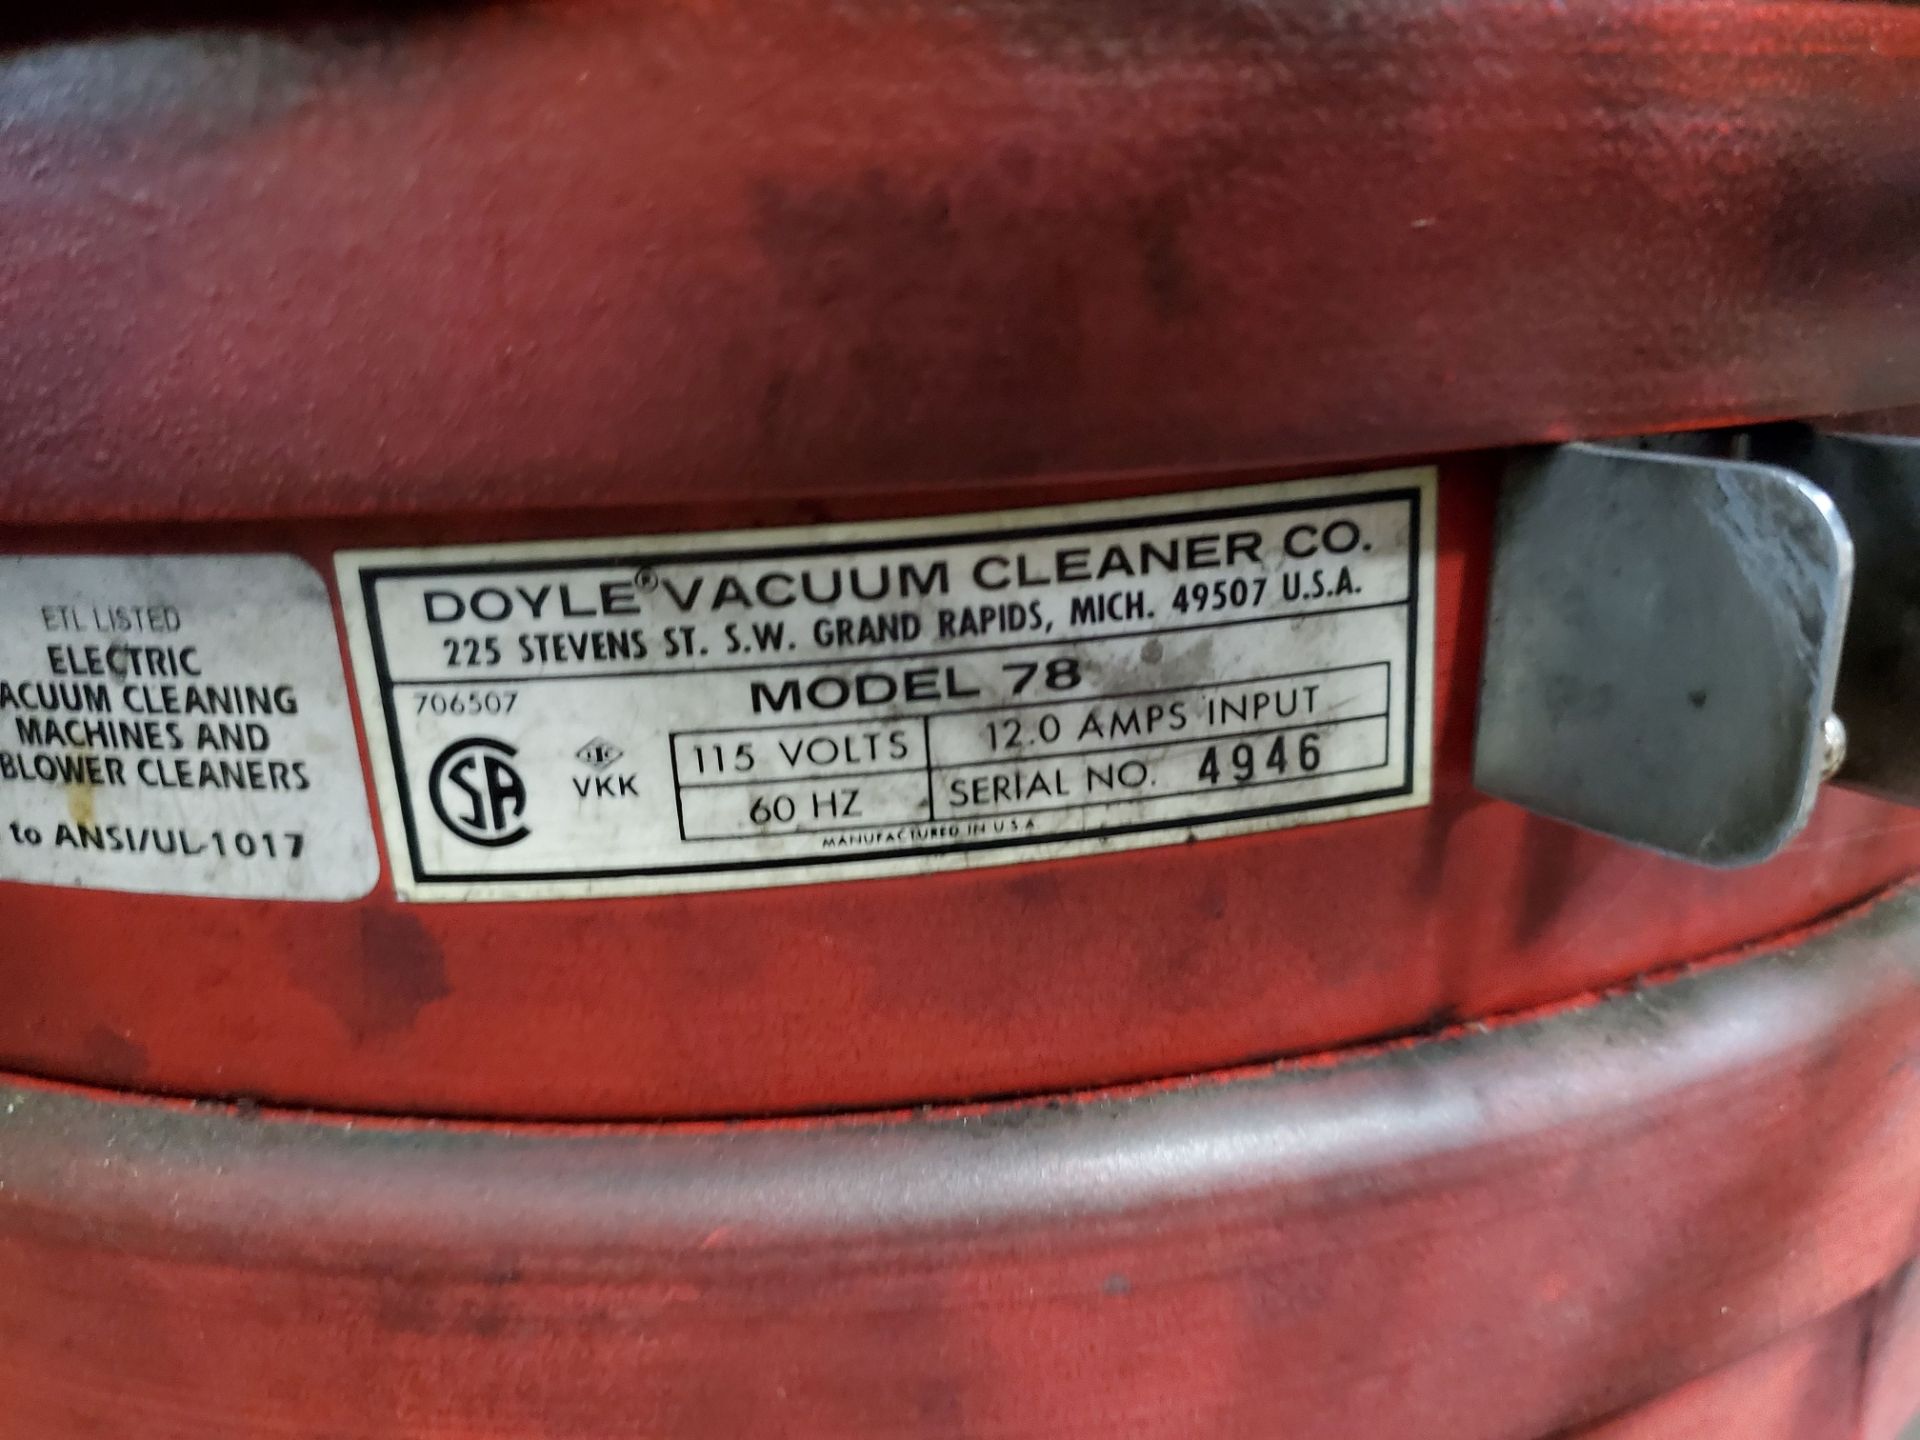 Doyle #78 Industrial Vacuum Cleaner - Image 3 of 3